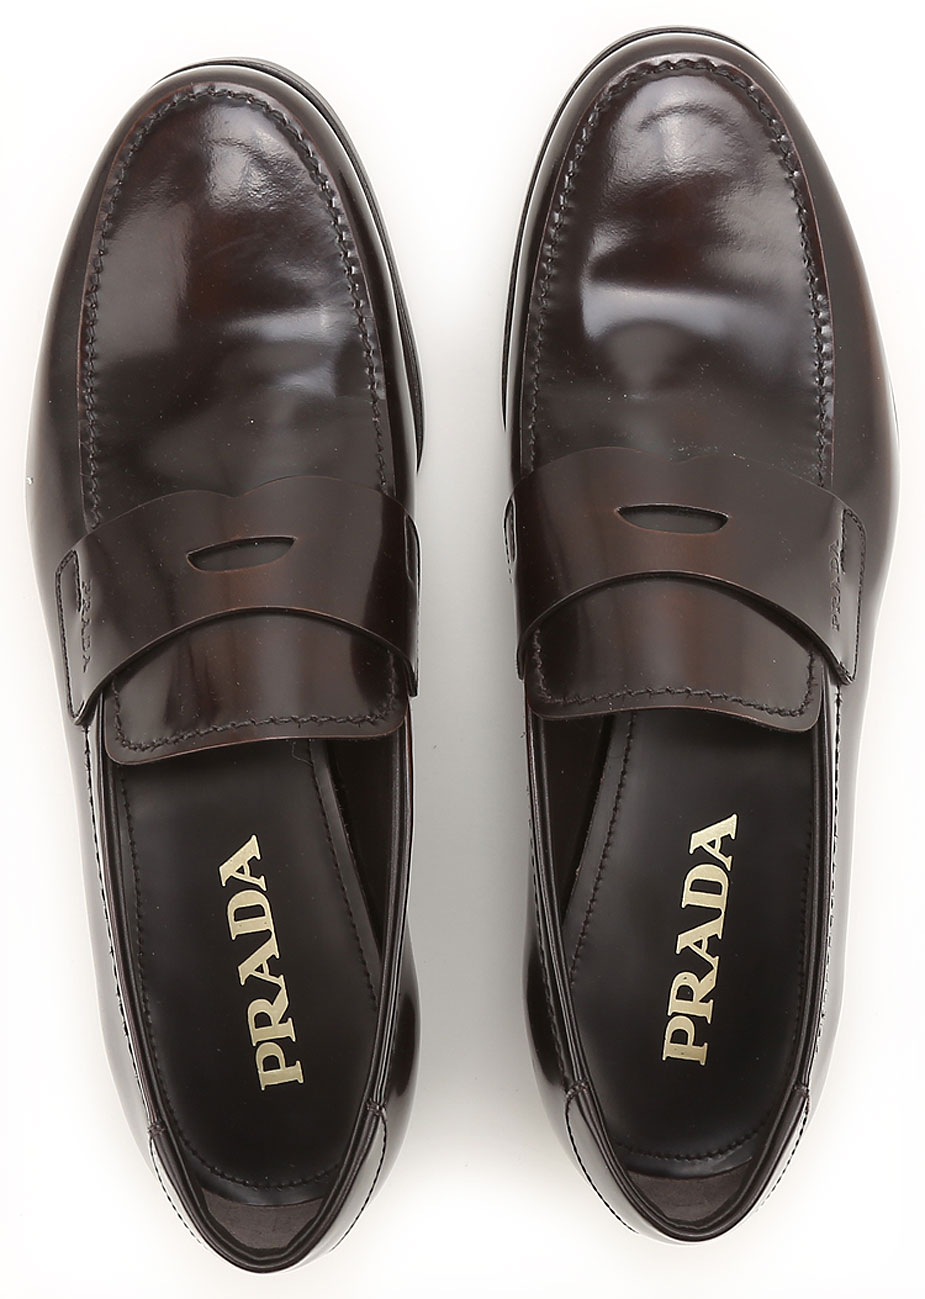 Mens Shoes Prada, Style code: 2db137-p39-f0038